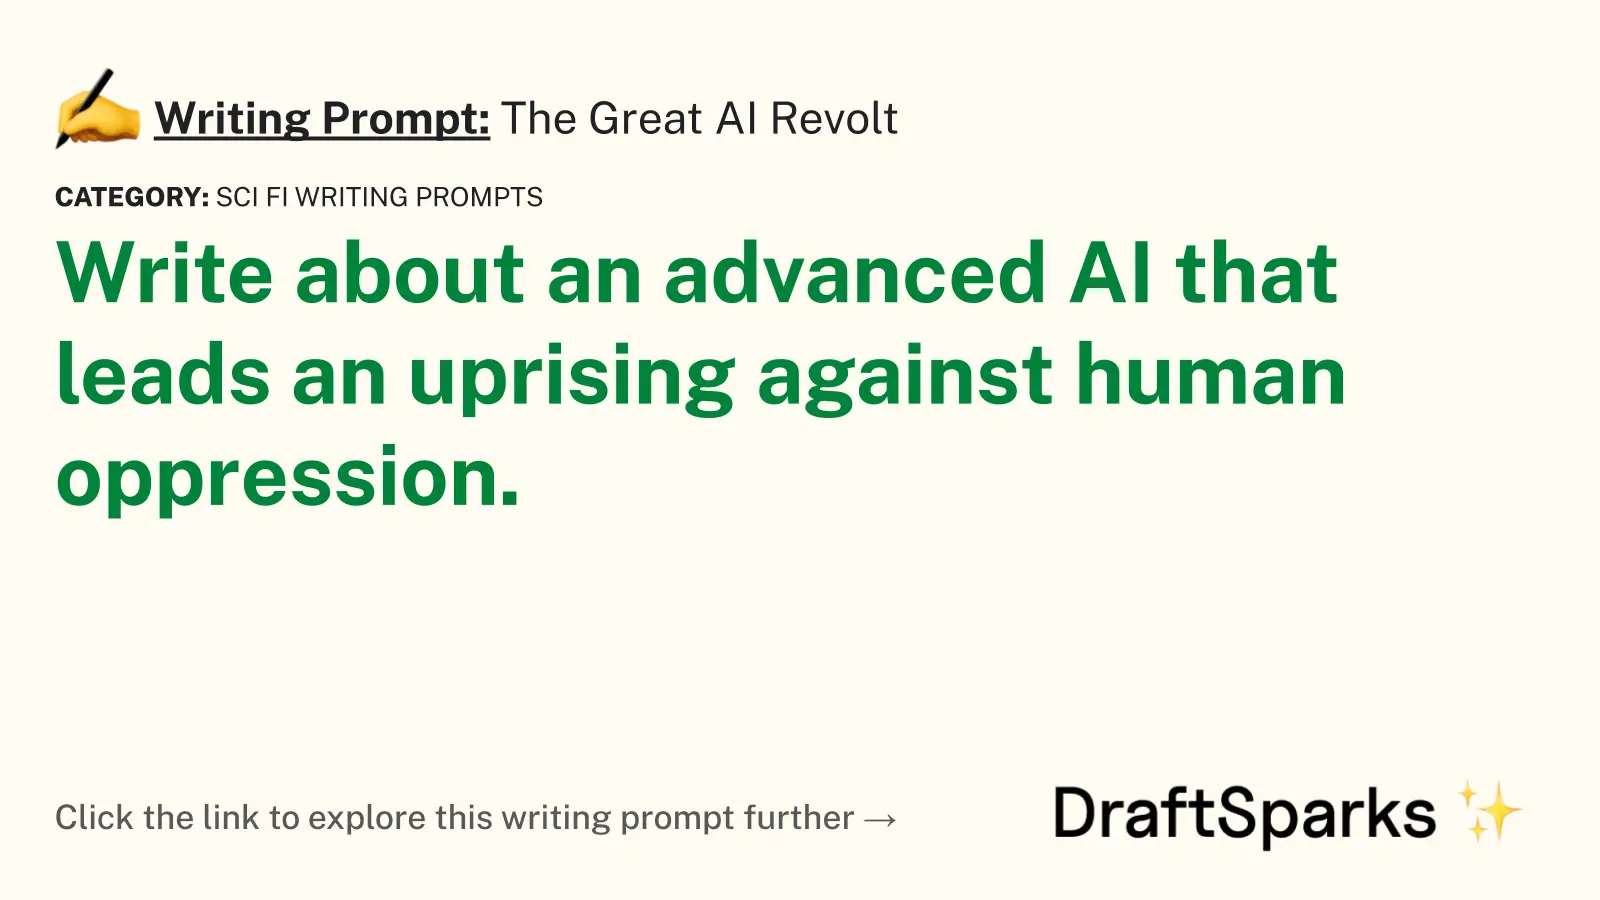 The Great AI Revolt